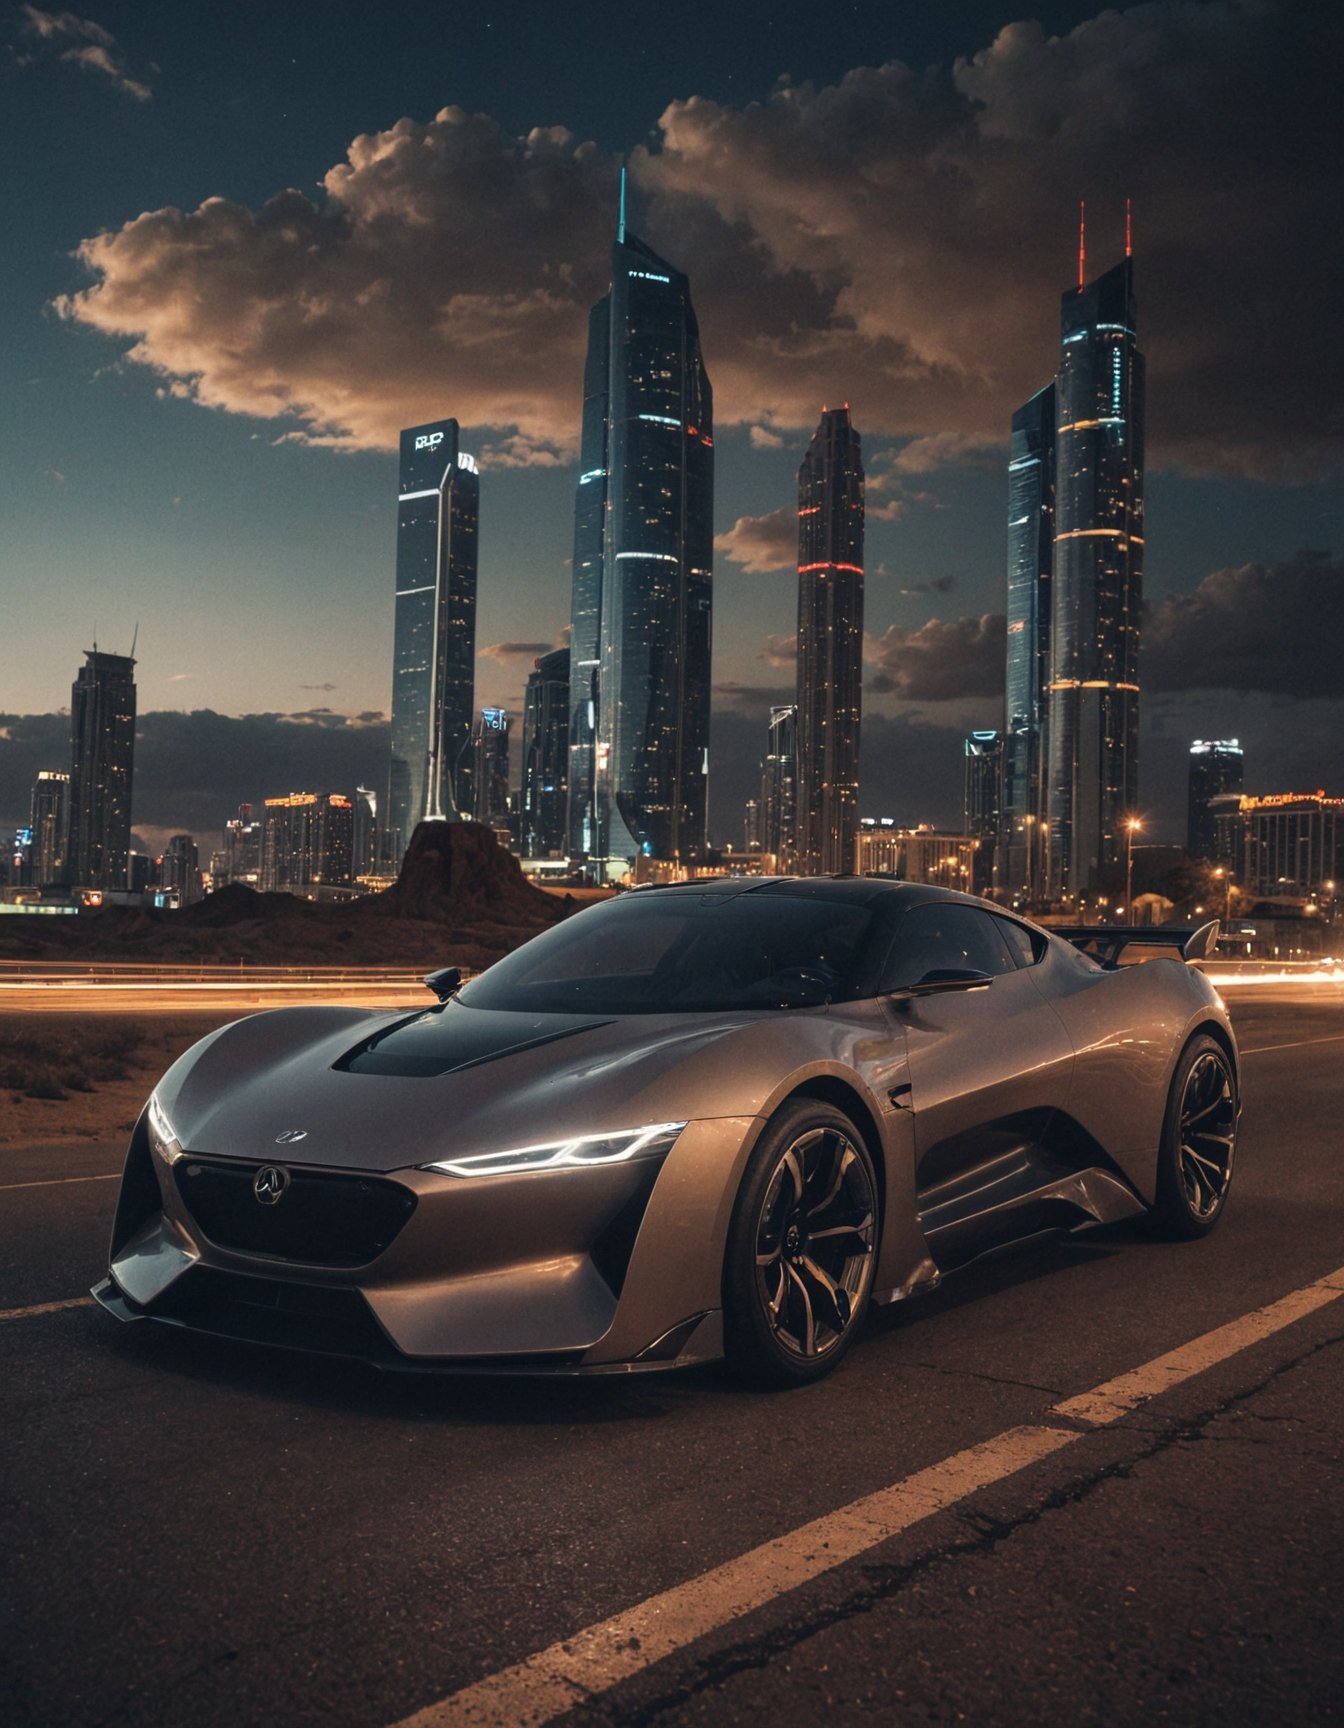 sci-fi, night, cinematic photo, futuristic design of electro car, majestic, desert city, skyscrapers, perfect lighting, clouds, vibrant, film grain